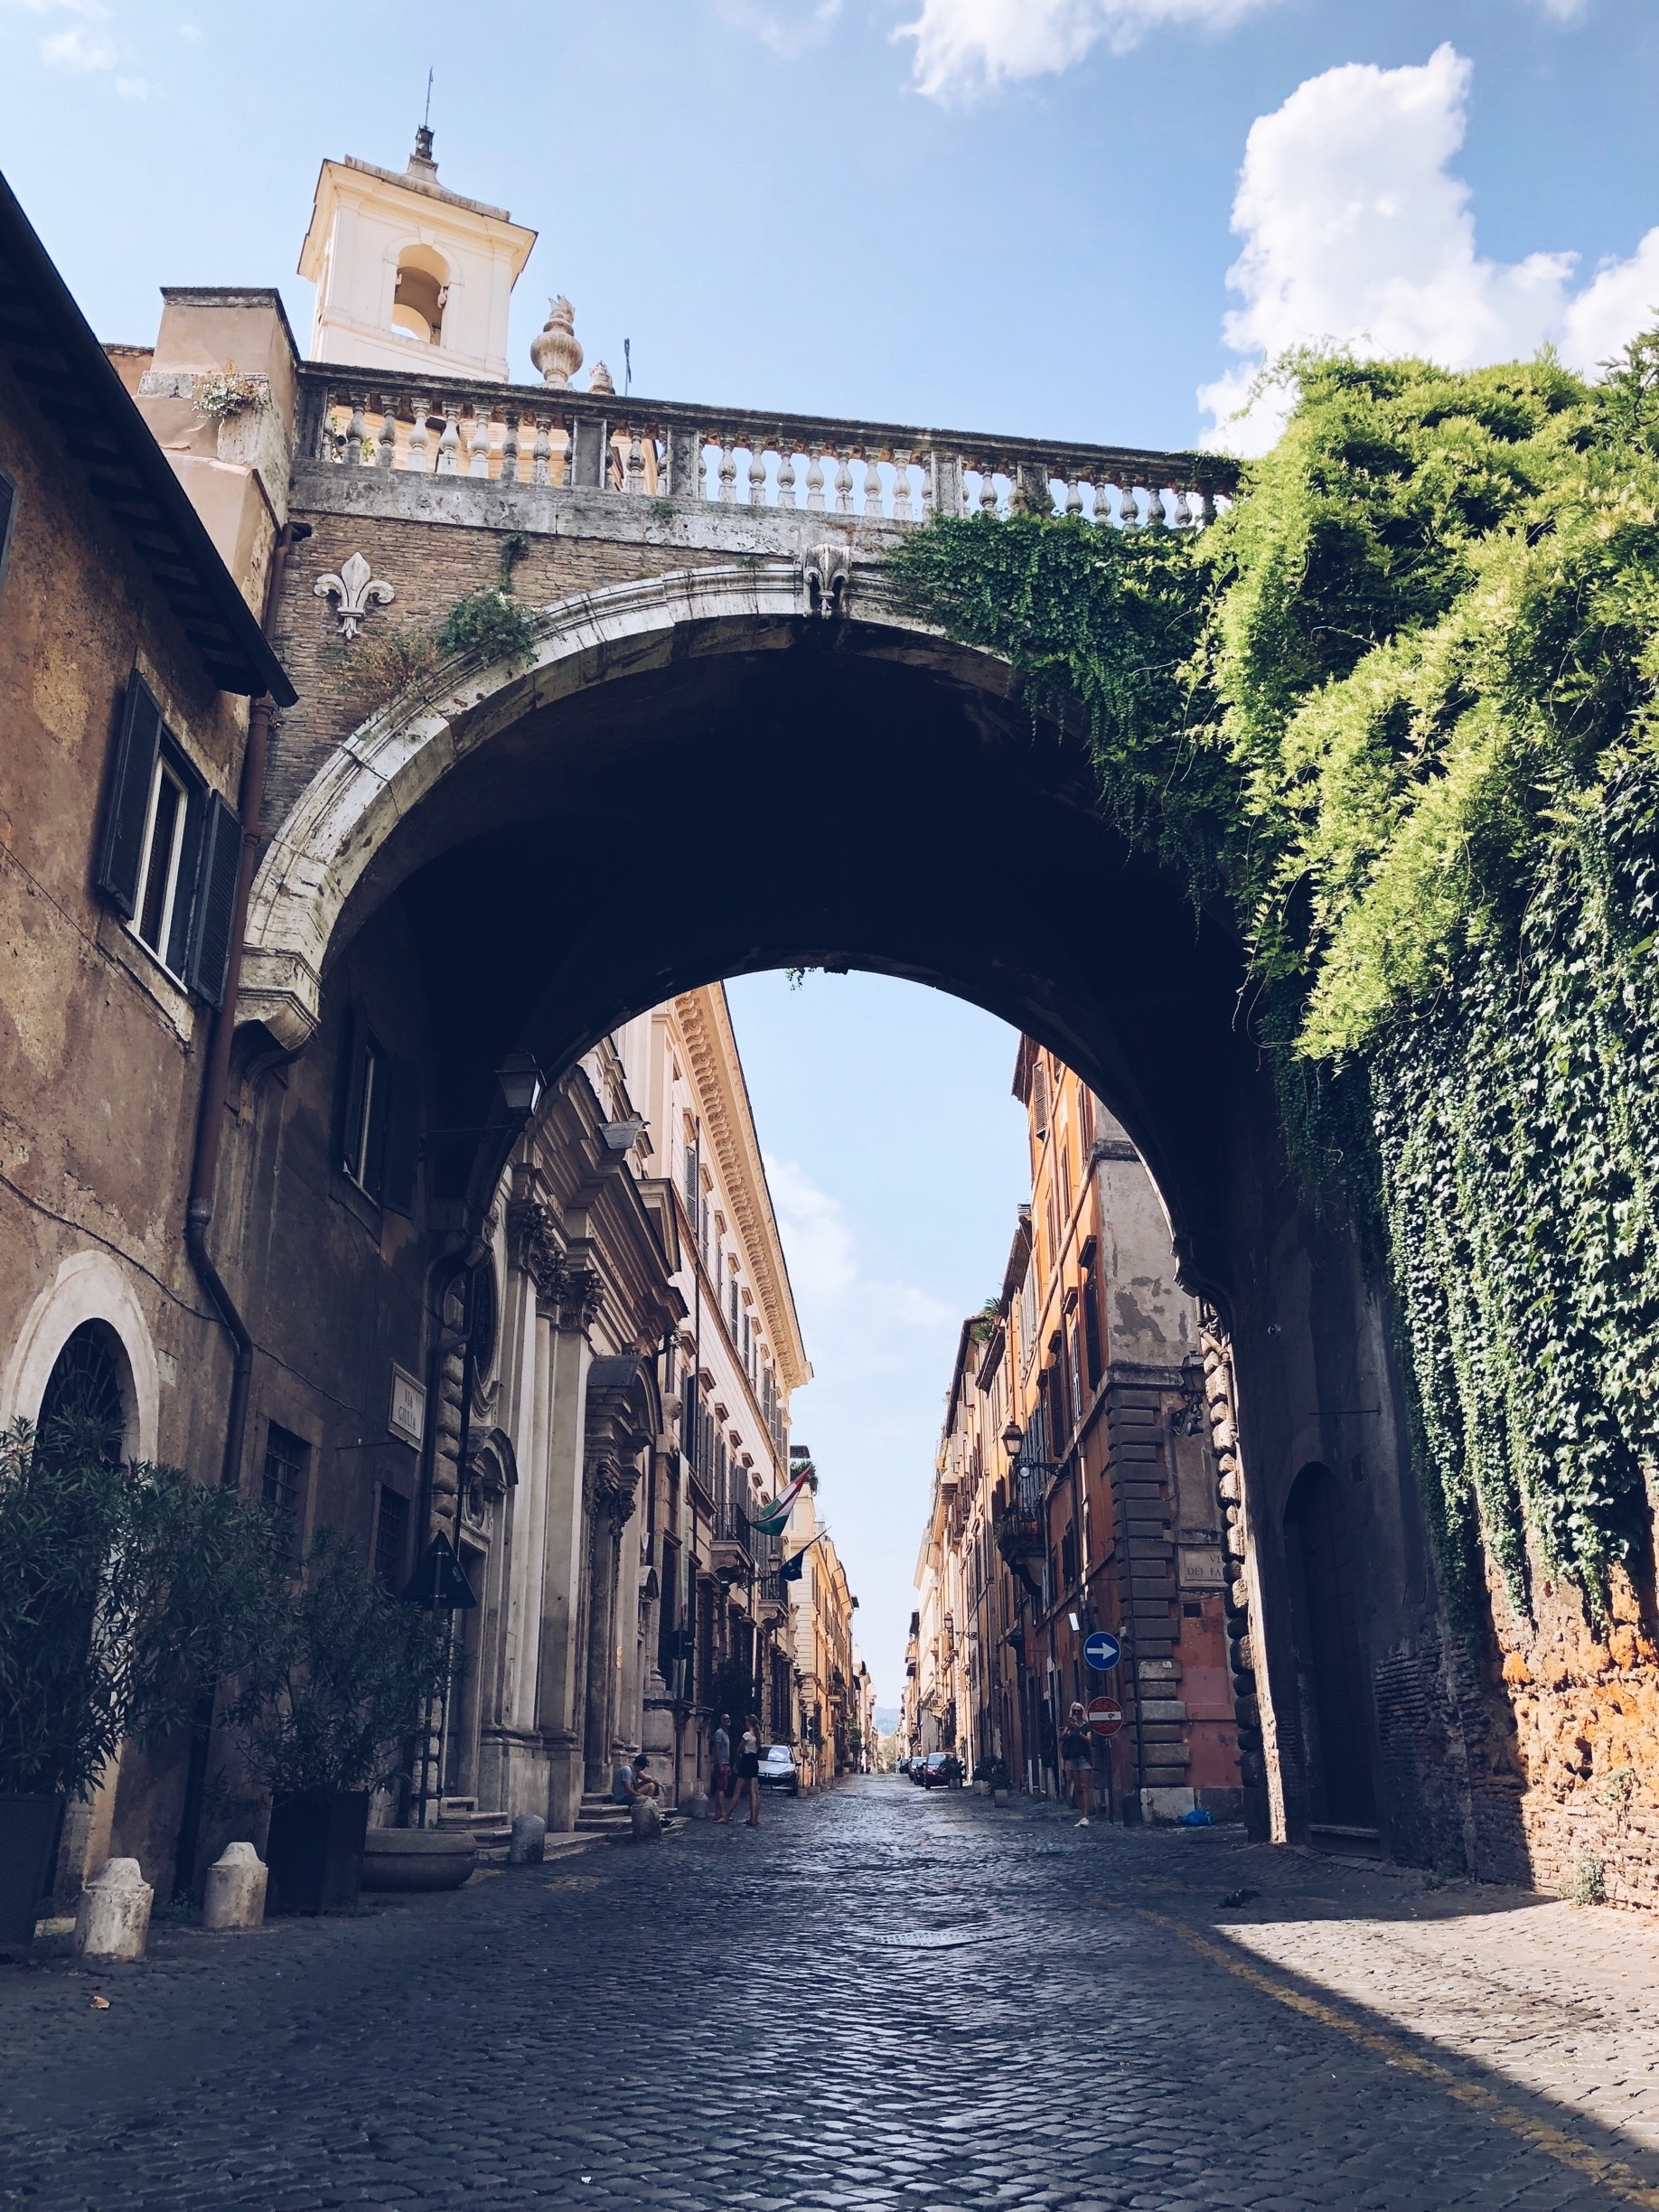 L’arco Farnese...
Via Giulia... #viagiulia #rome #roma #italy #italia #iphonex #iphoneonly #iphoneography #travel #travelphotography #latergram #wanderlust #wanderlustwhatelse #streetlife #streetphotography